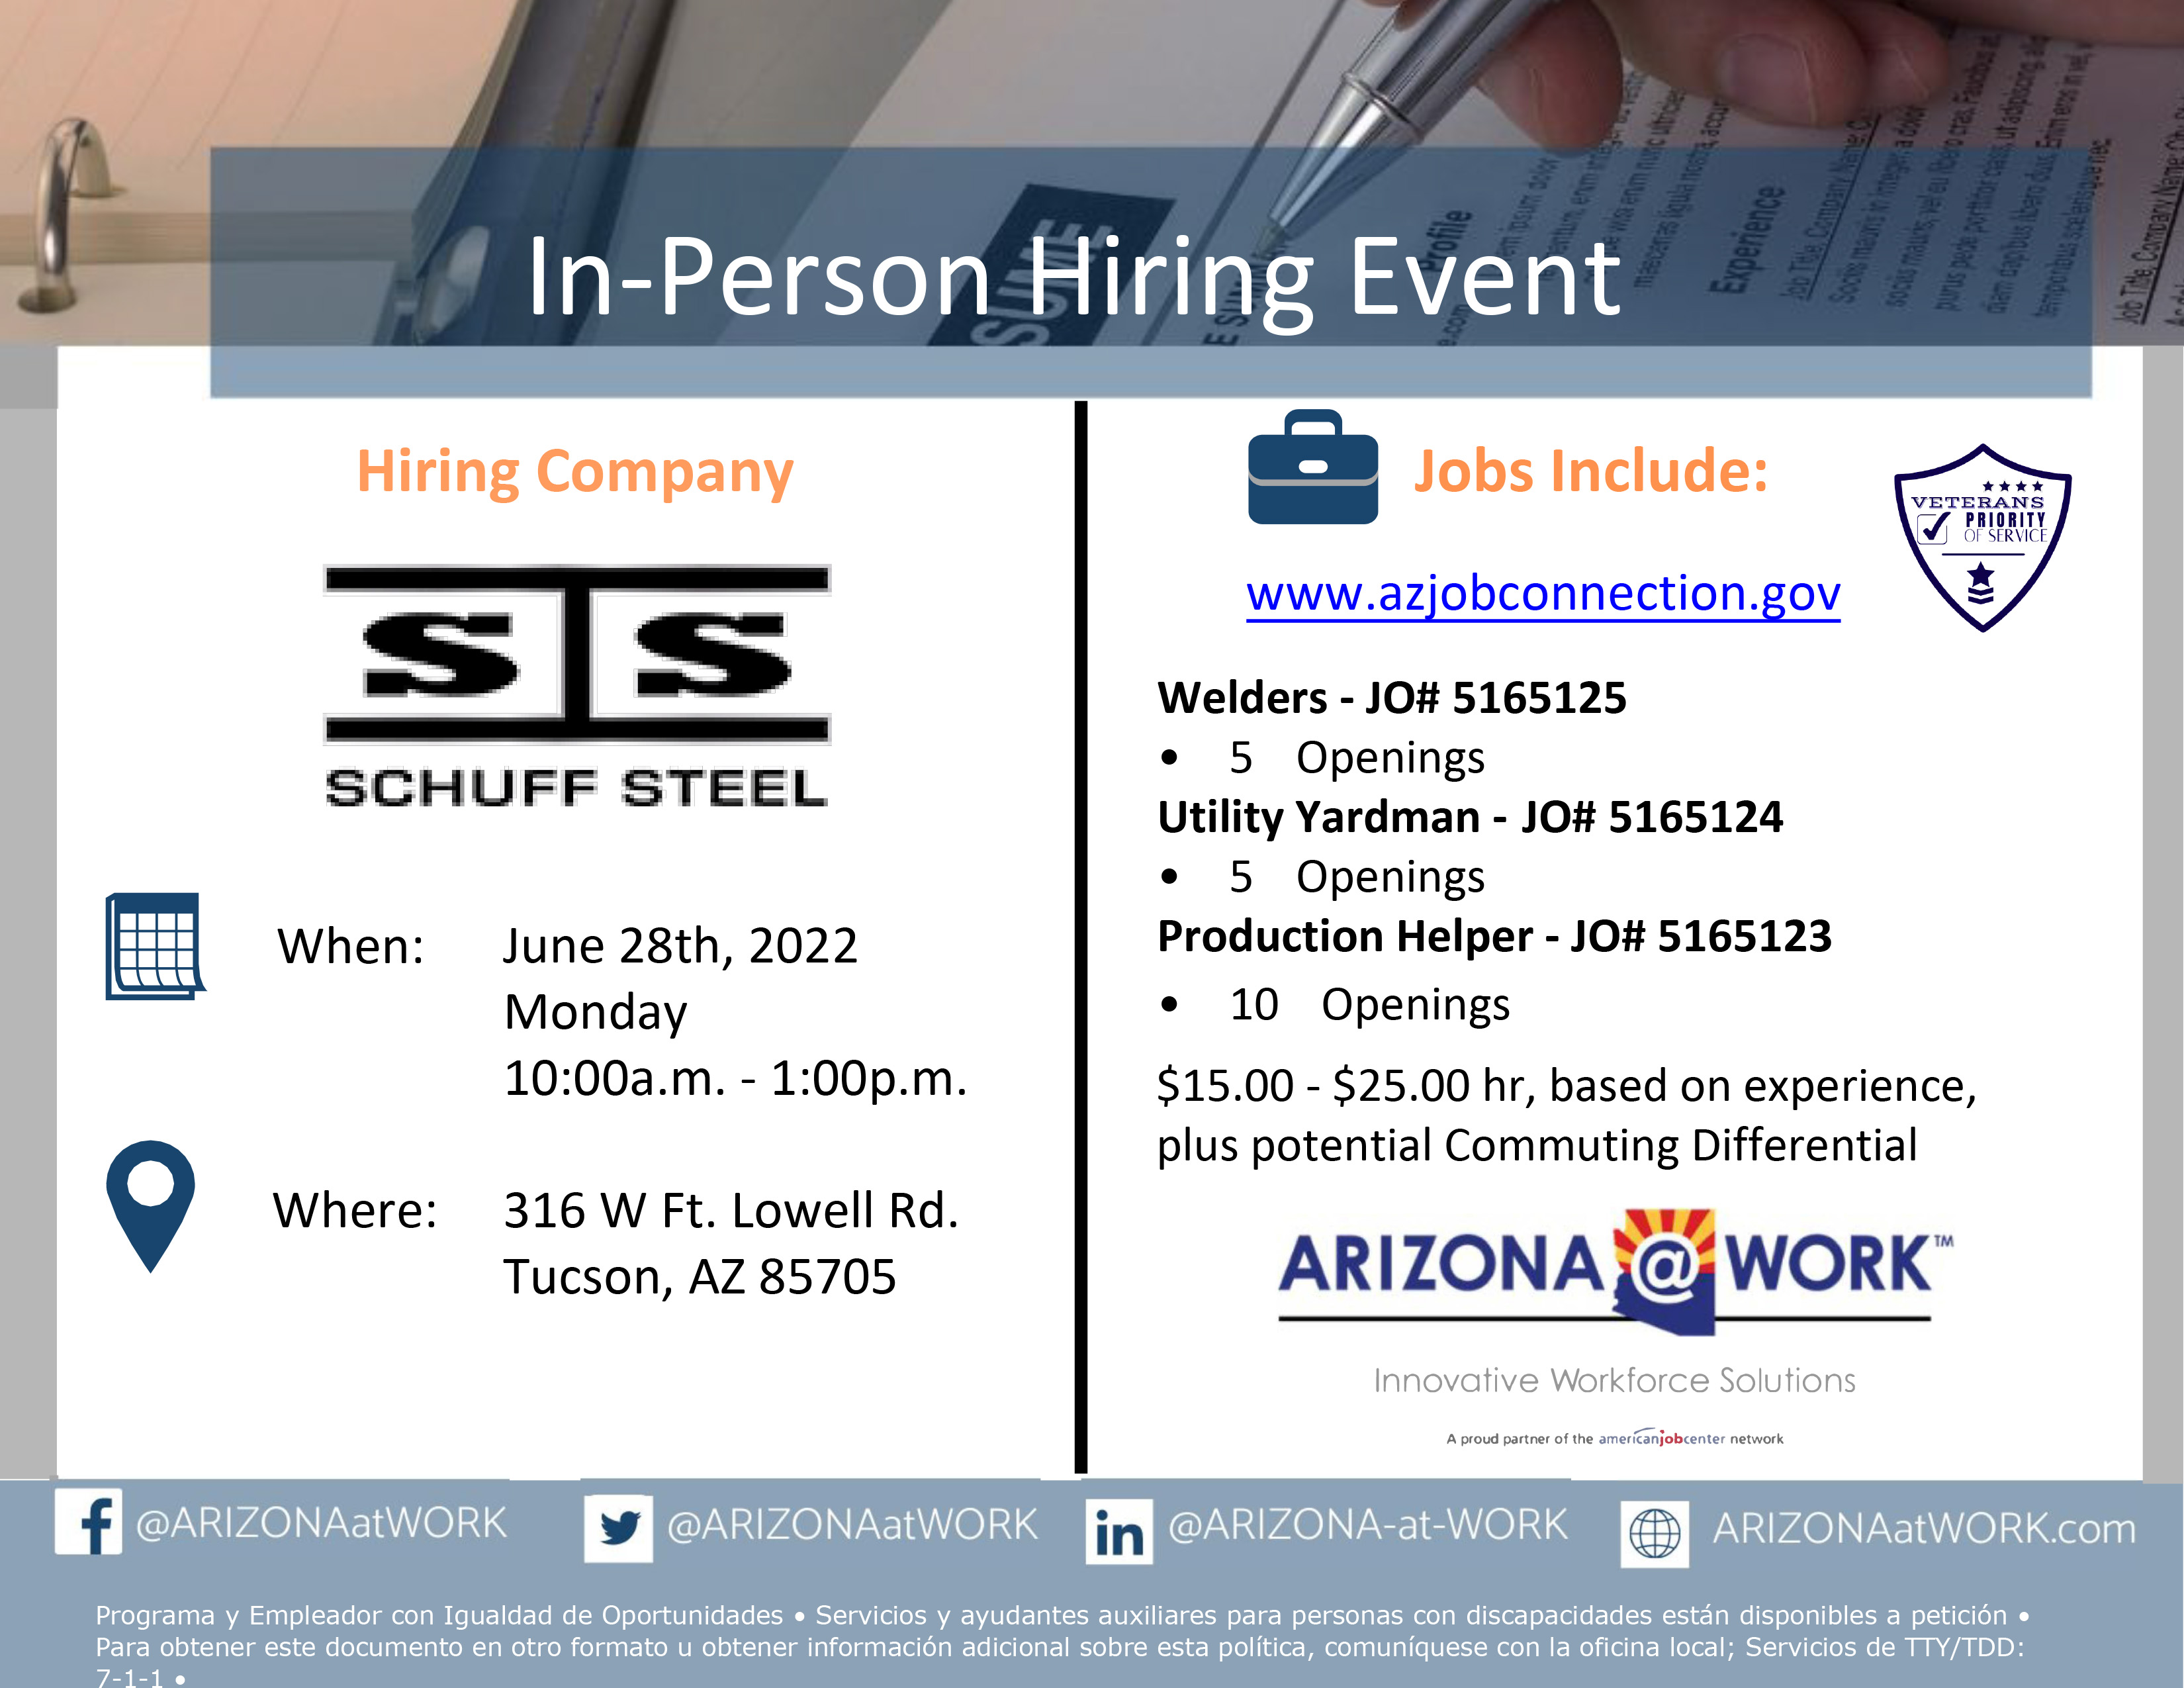 Schuff Steel hiring event flyer for June 28 event